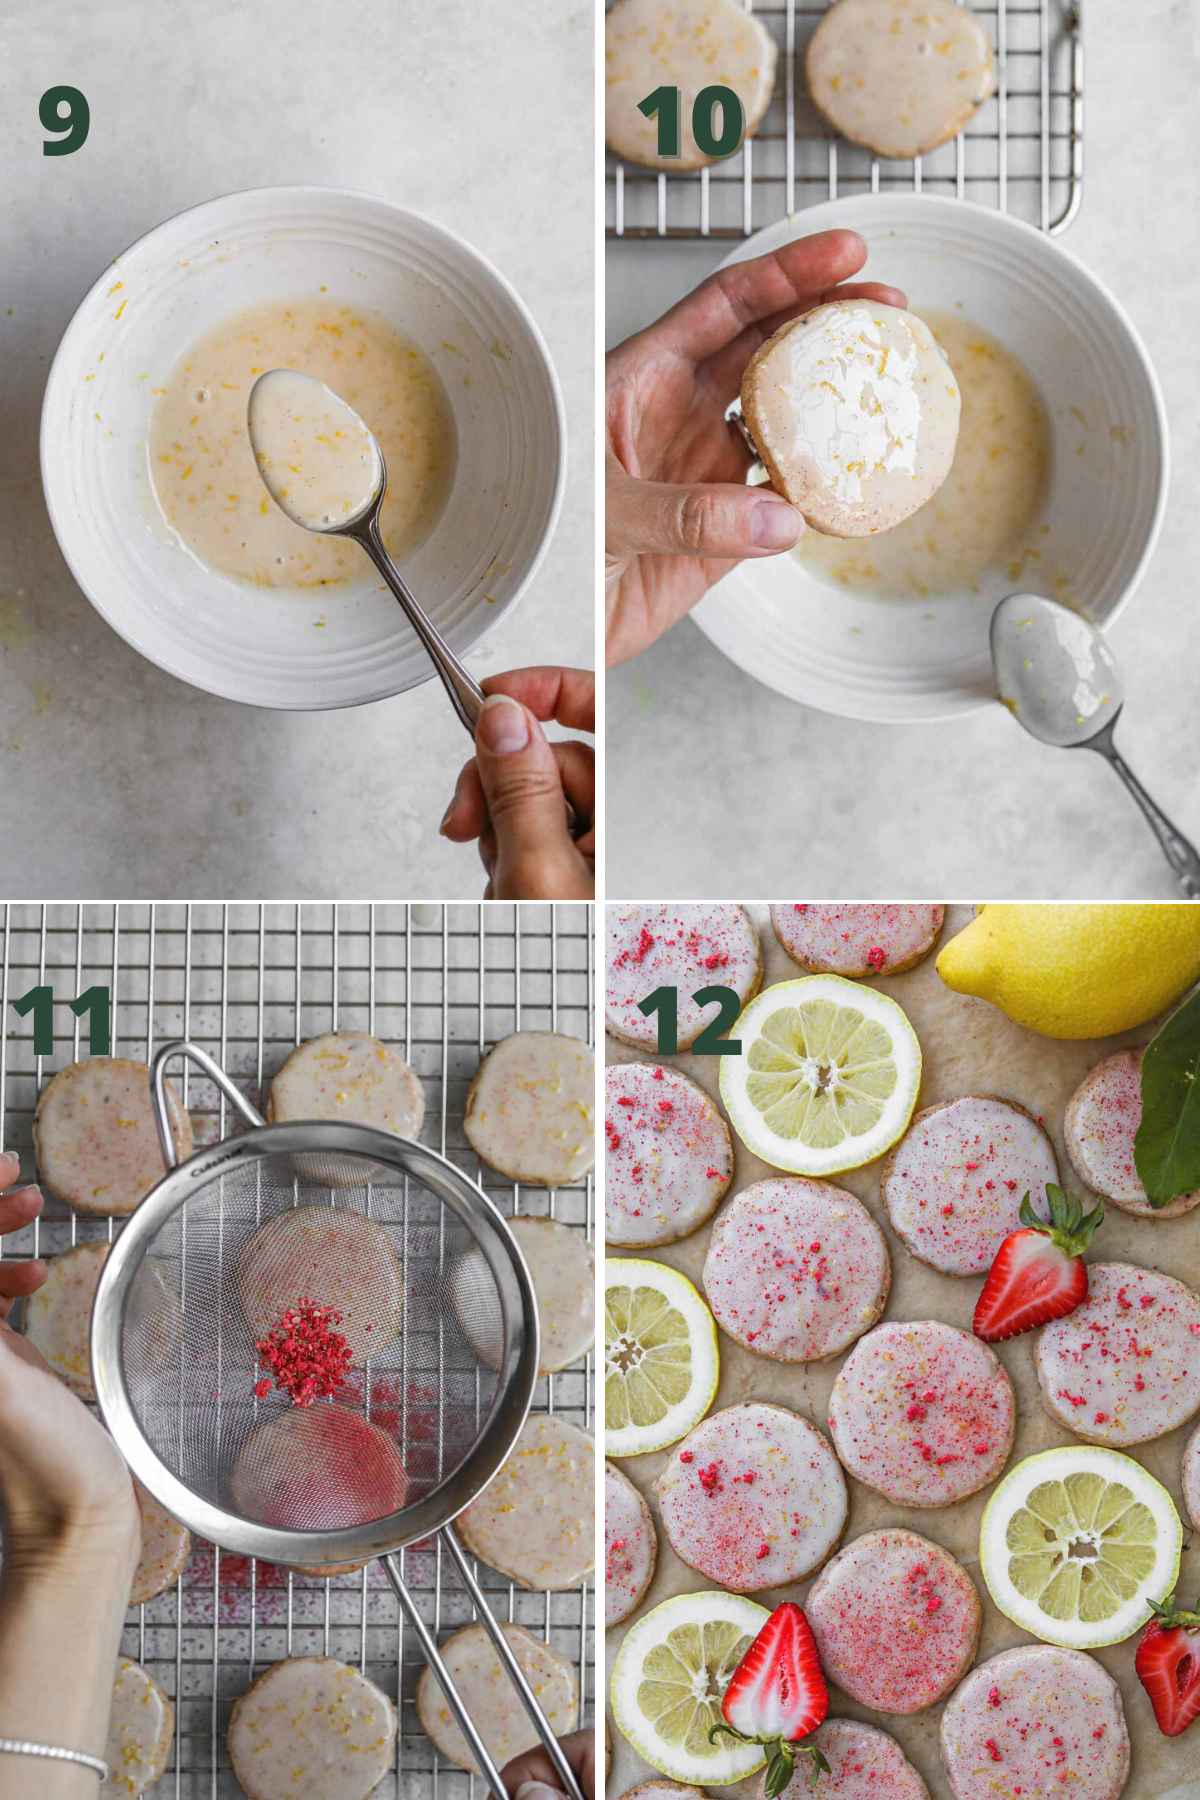 Steps to make strawberry lemonade shortbread cookies, including making the lemonade glaze, dipping cookies in glaze, and dusting with strawberry powder.